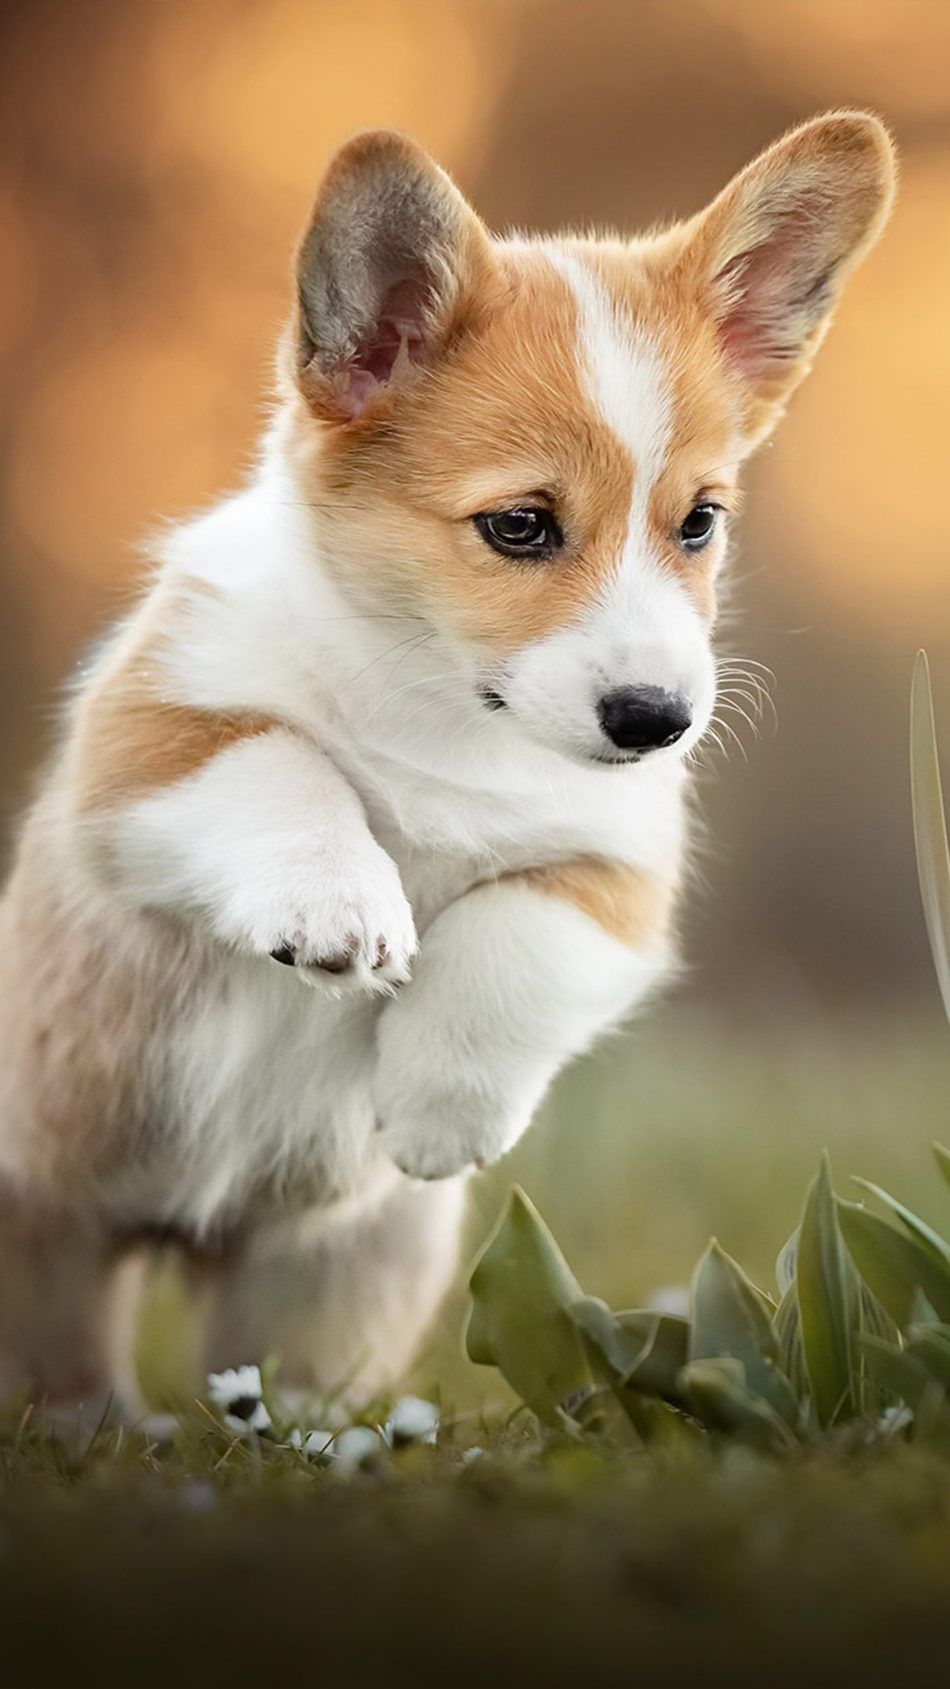 Corgi Puppy Pet Dog 4K Ultra HD Mobile Wallpaper. Corgi puppy, Puppies, Cute puppy wallpaper